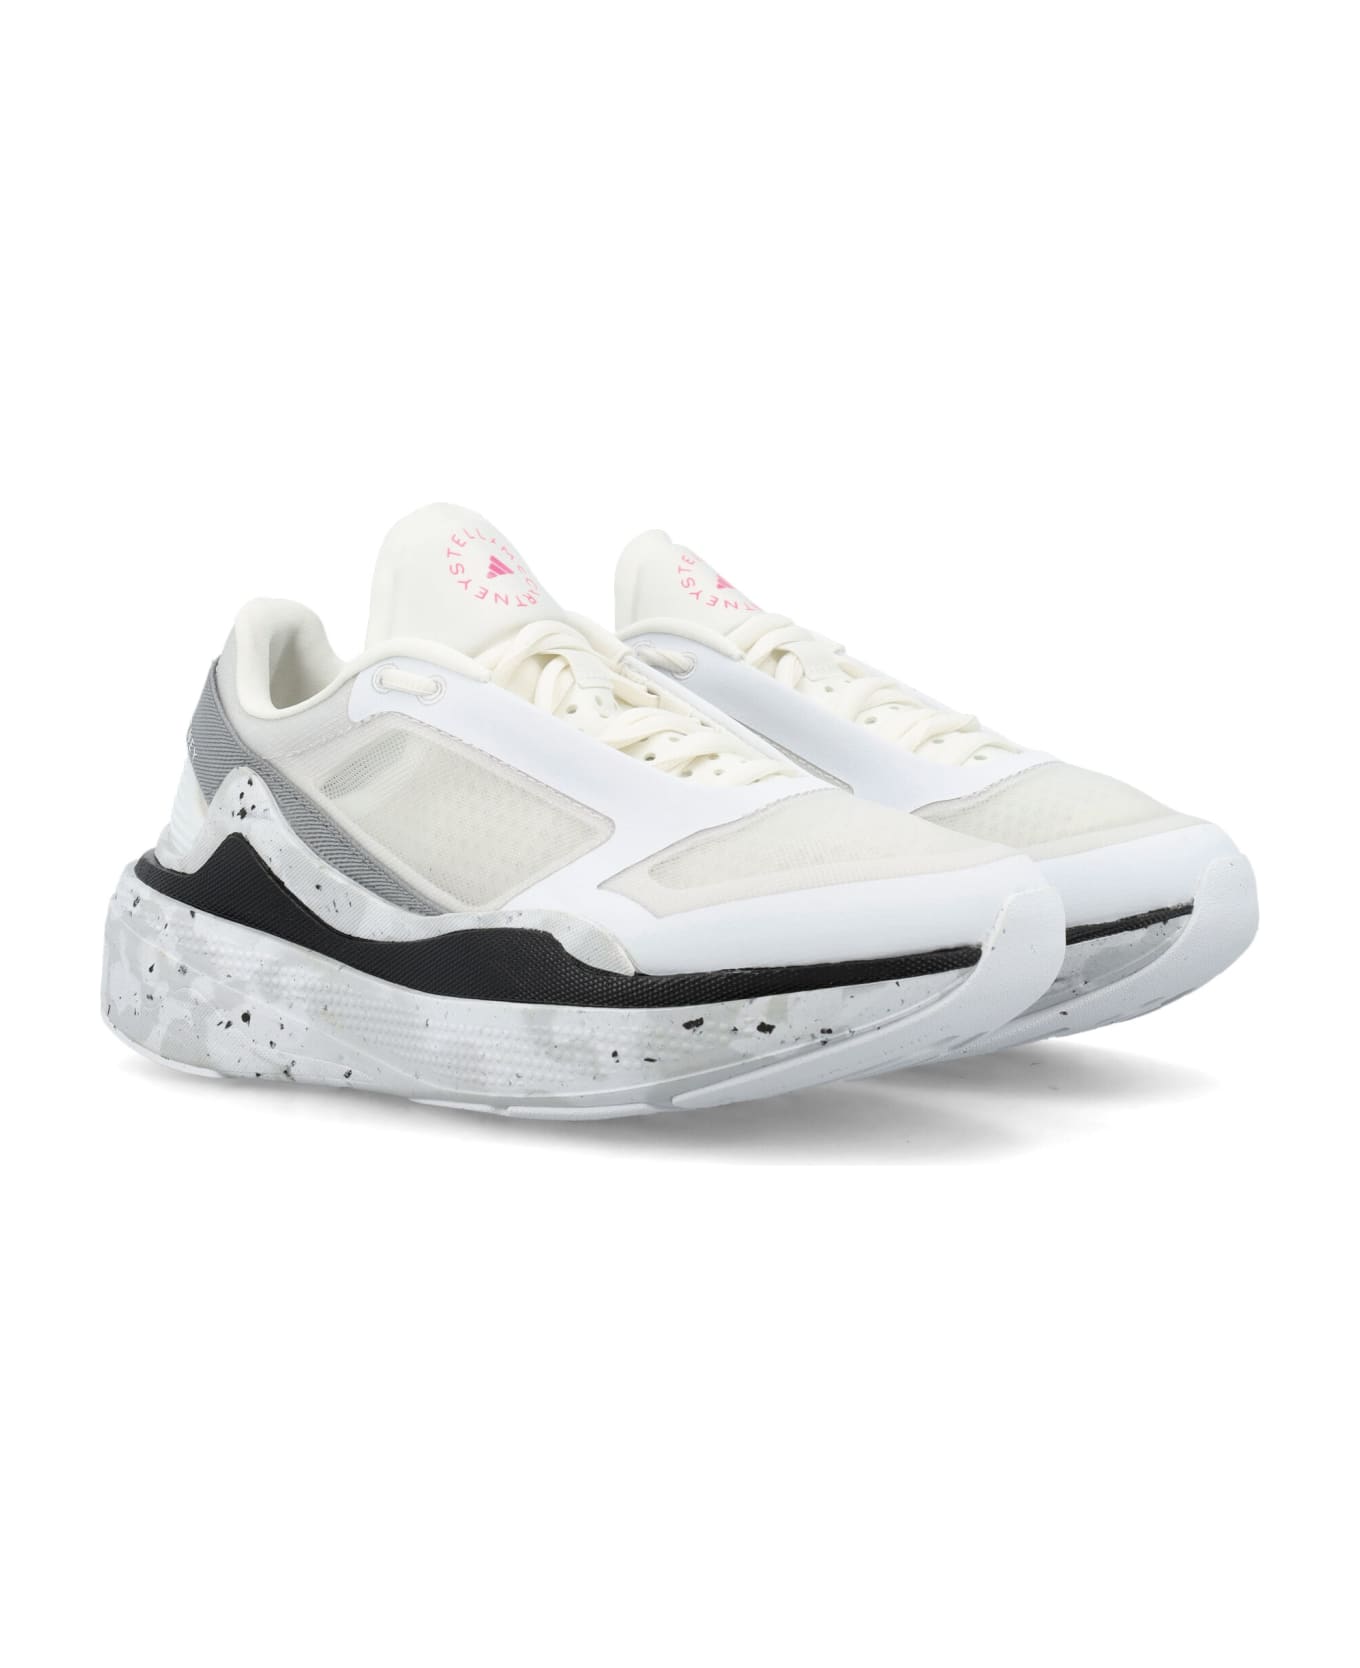 Adidas by Stella McCartney Woman's Eartlight Mesh Running Shoes - WHITE